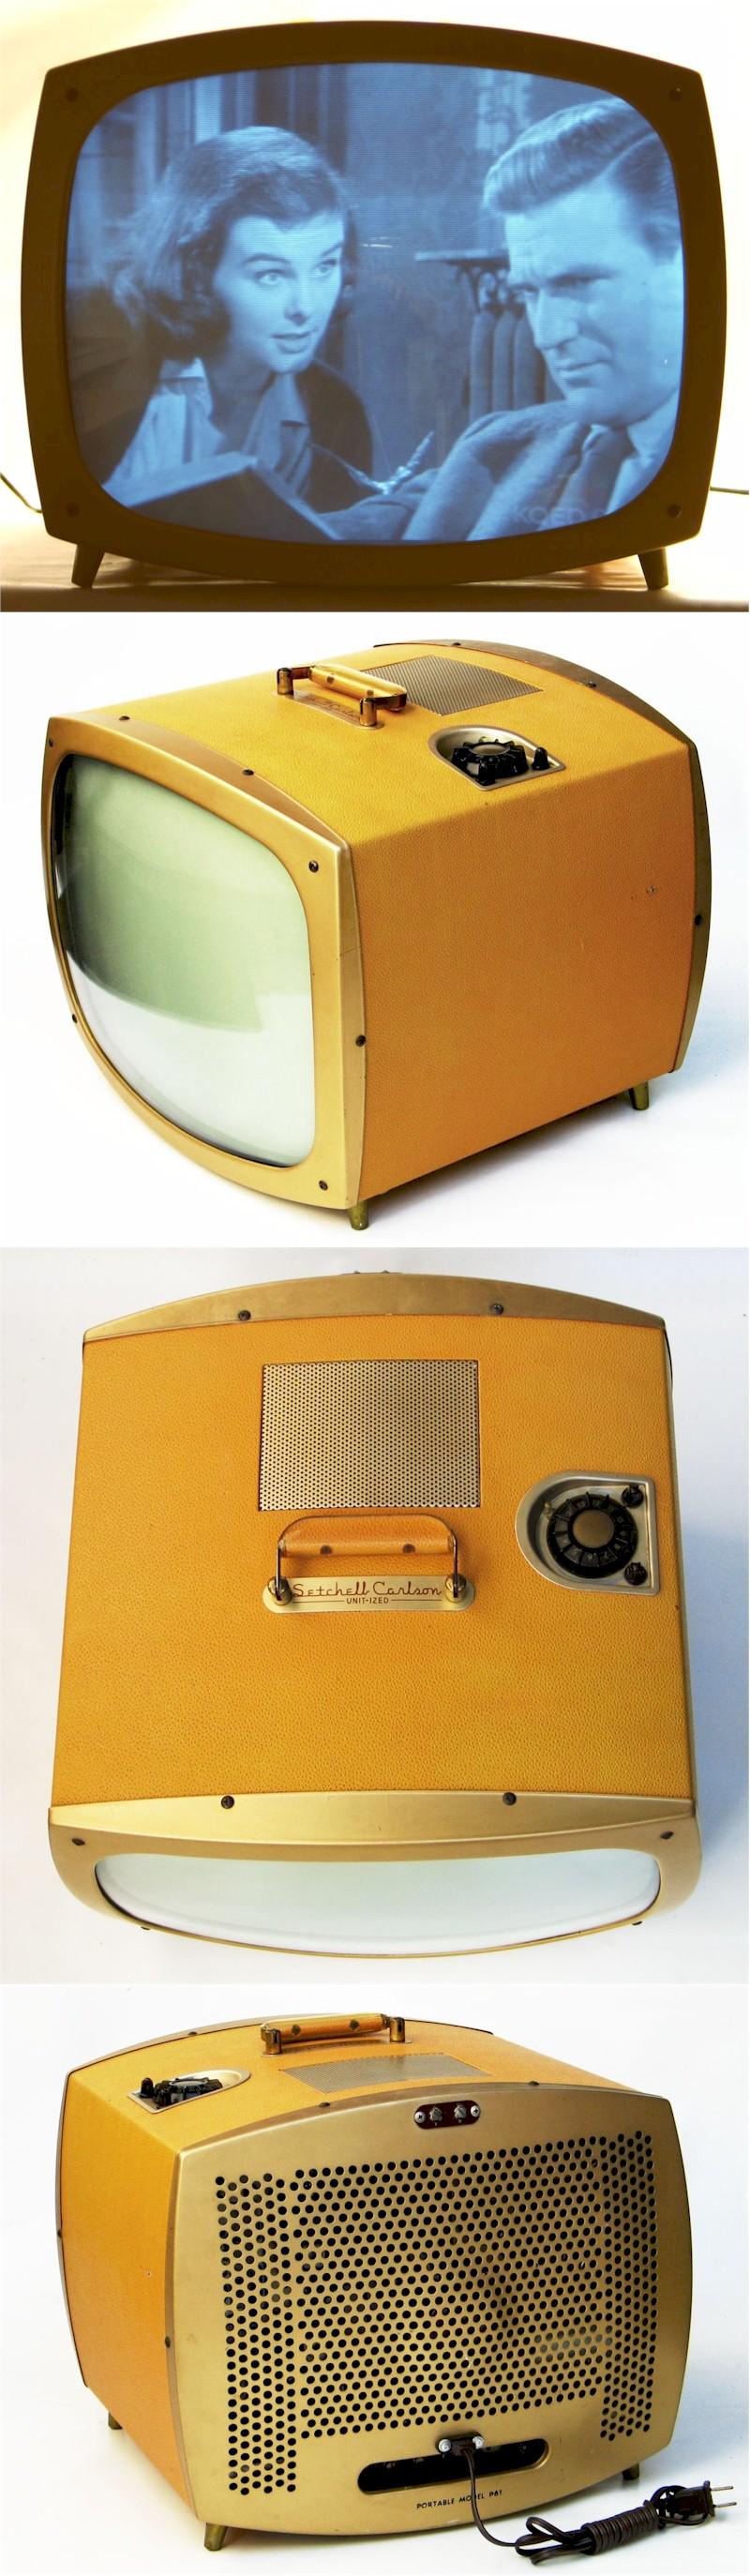 Setchell-Carlson P61 Television (1955)